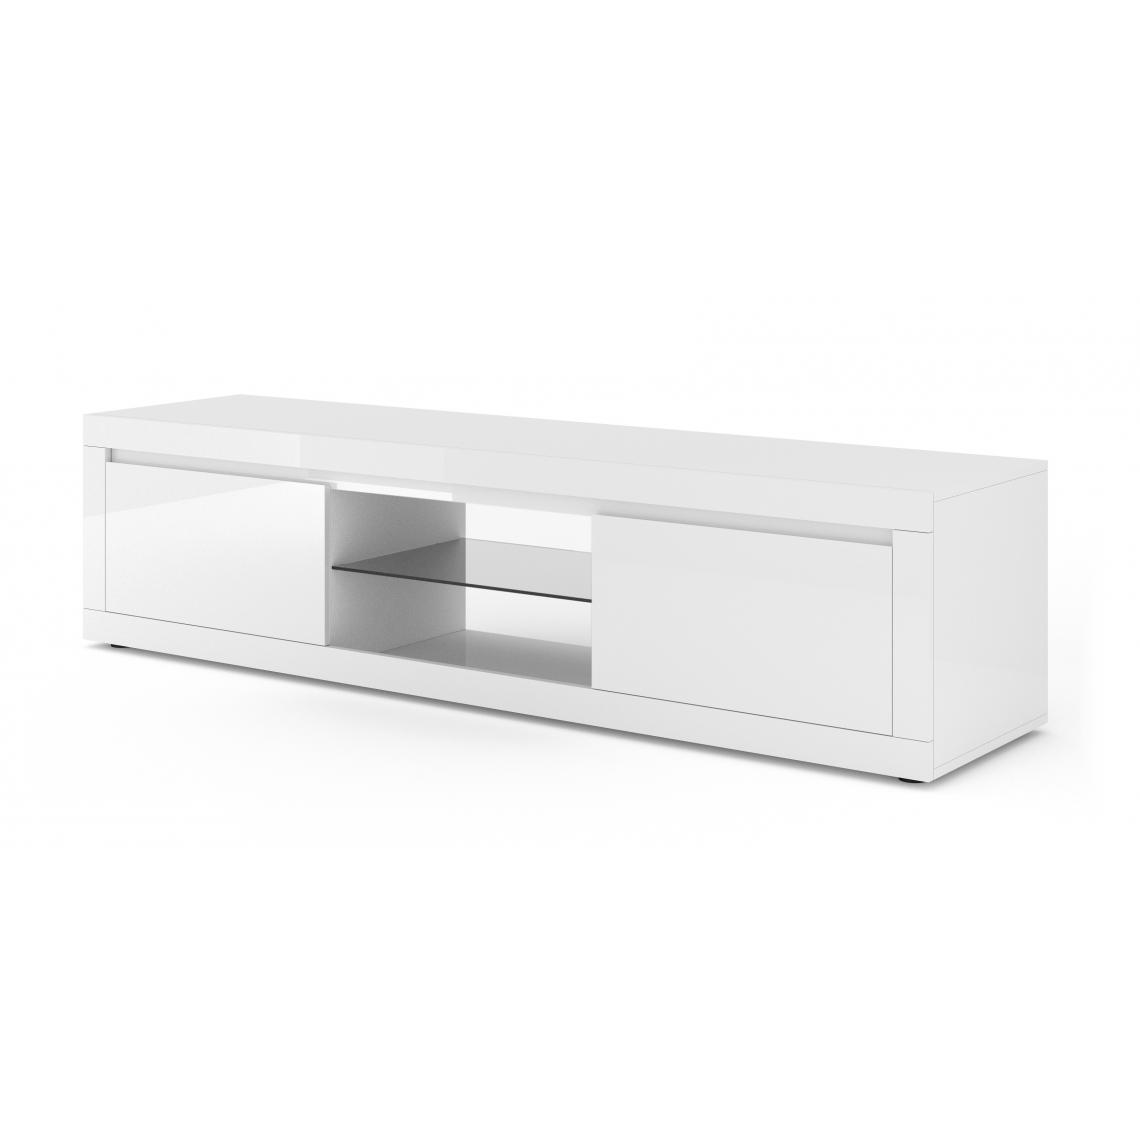 Bim Furniture - Meuble TV bas Bello Bianco V 180 cm meuble HiFi blanc mat / blanc brillant - Meubles TV, Hi-Fi